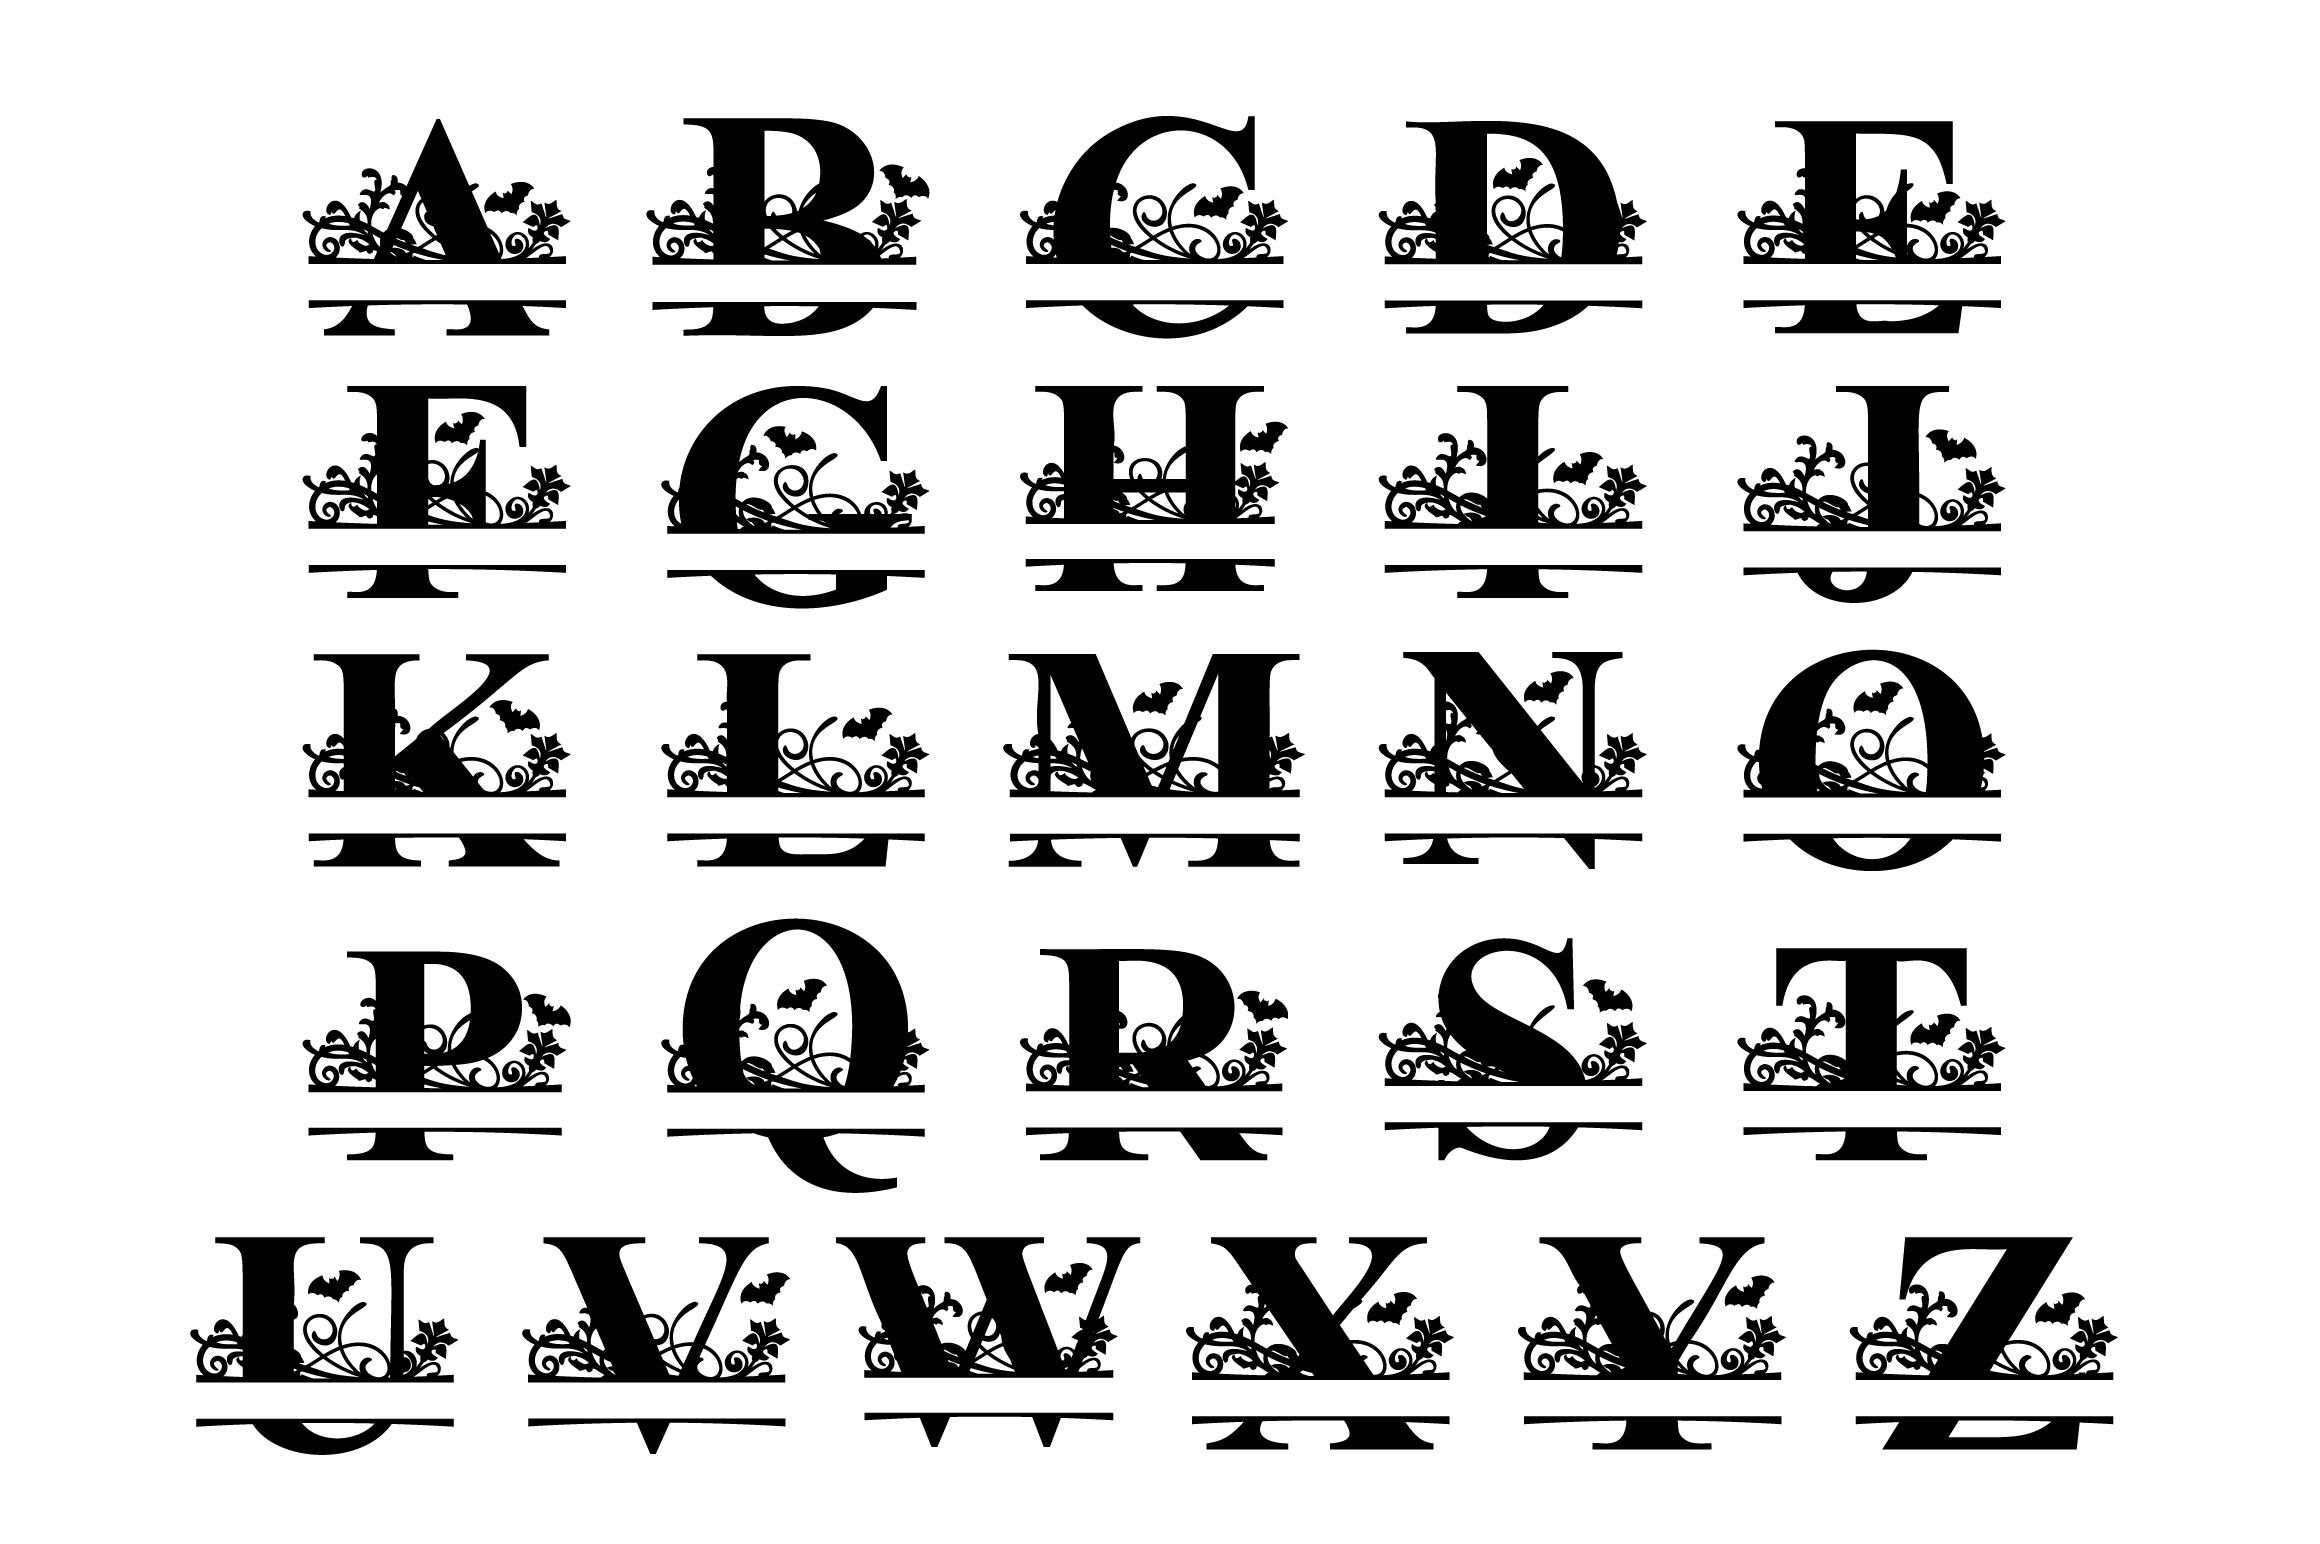 Split Letters A- Z - 26 Split monogram SVG files with banners - So